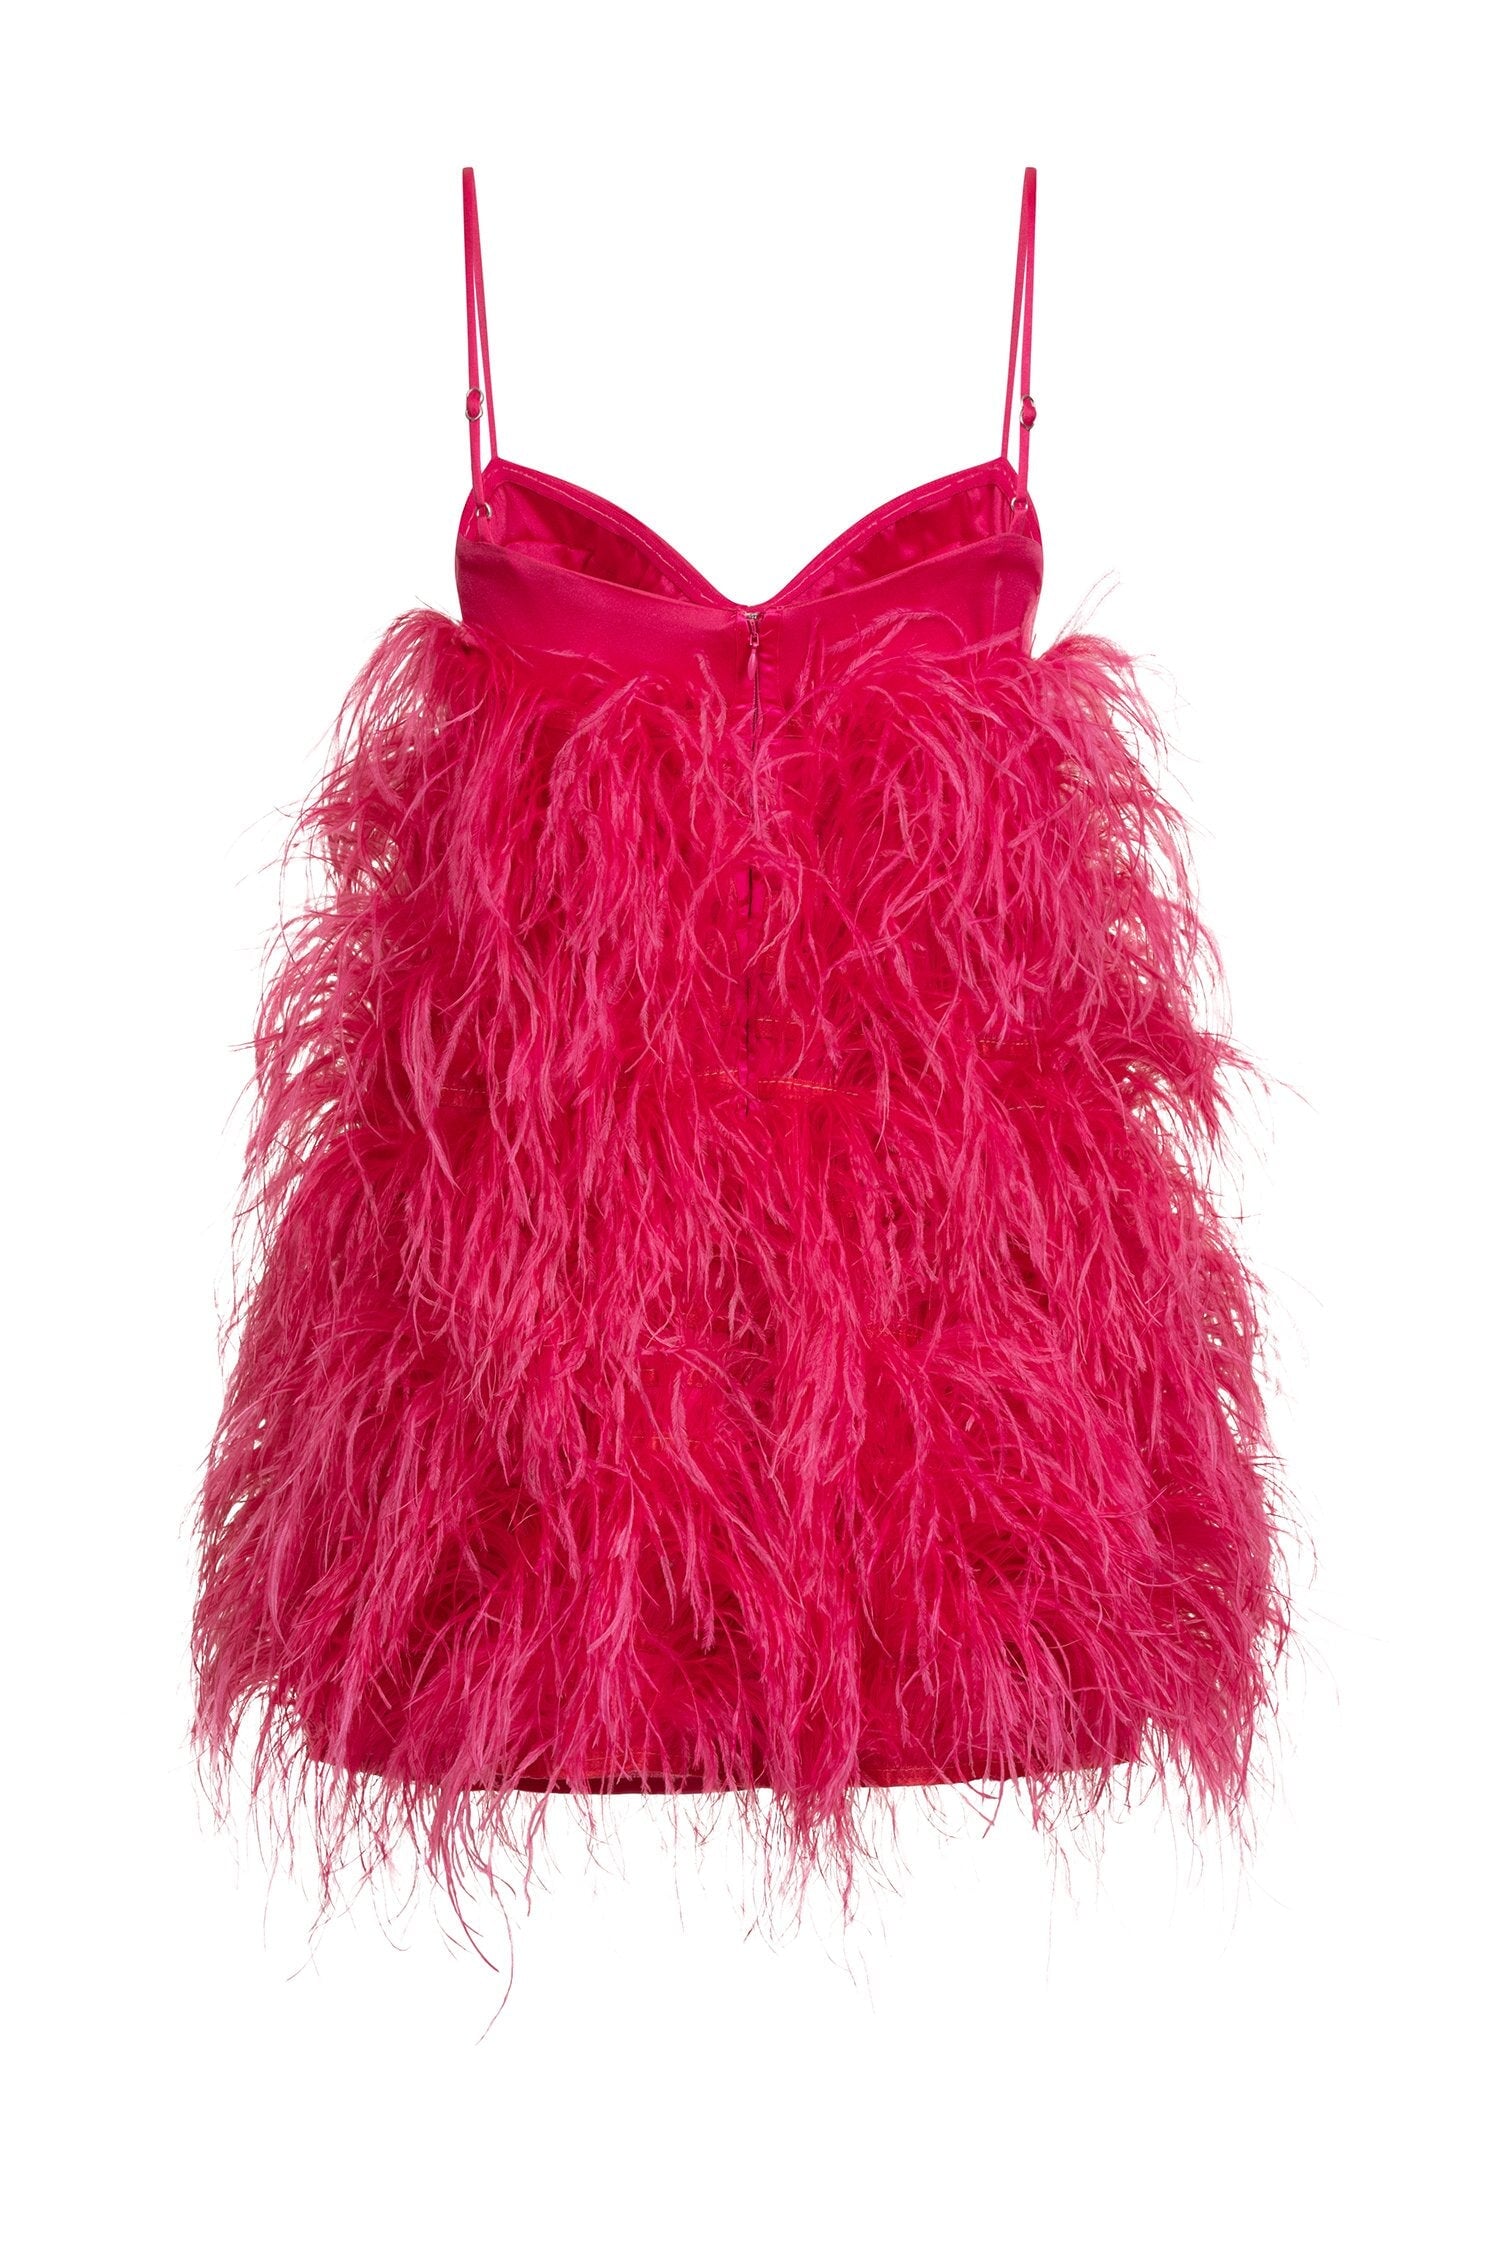 Halley Dress, Hot Pink Stretch Crepe